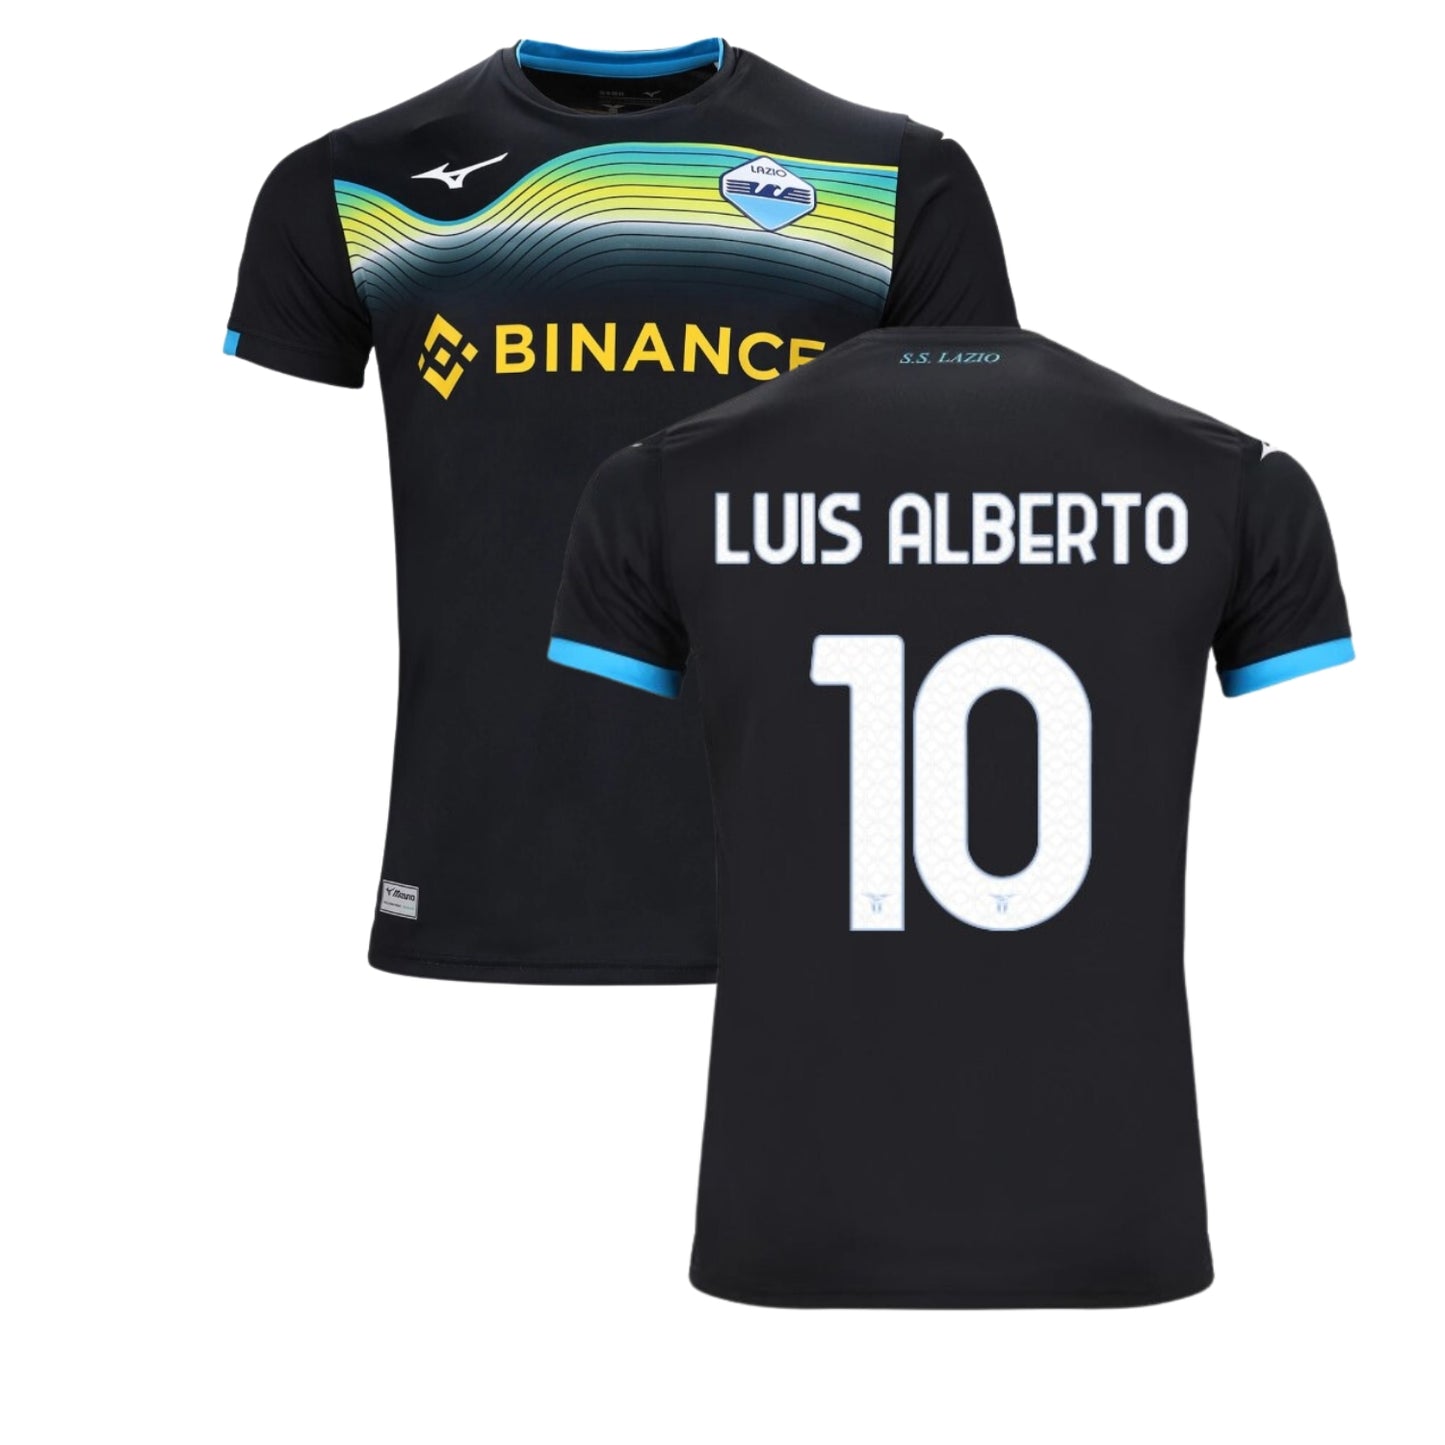 Luis Alberto Napoli 10 Jersey